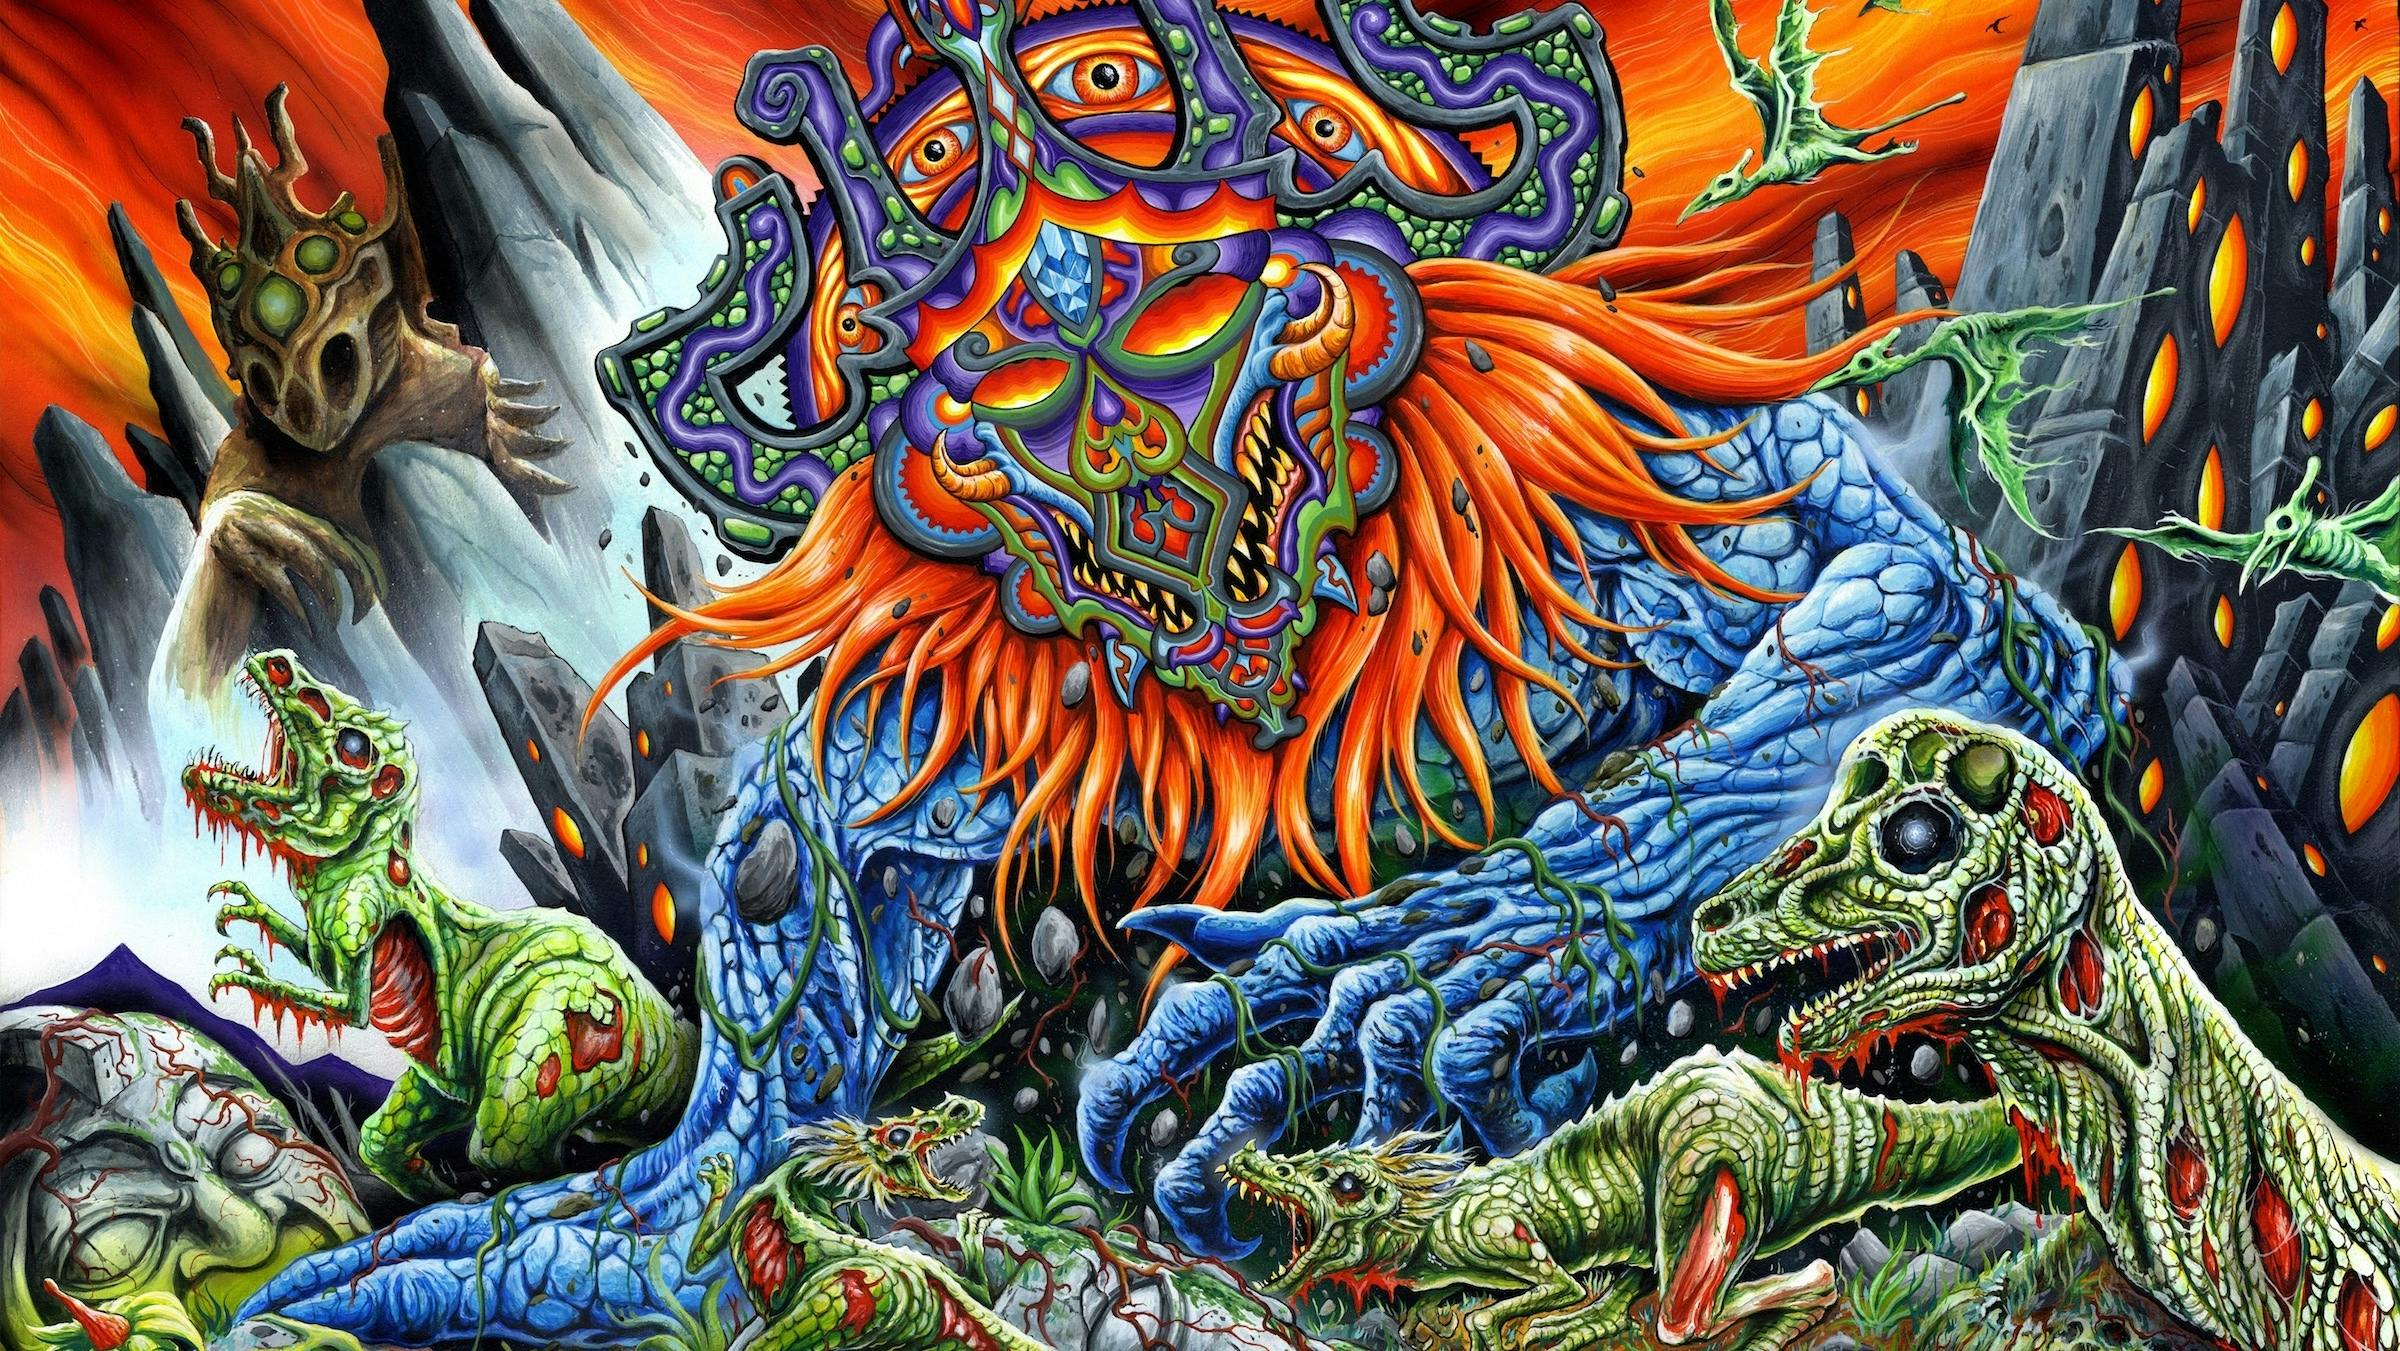 Skinner's Doom Metal Art Is A Lovecraftian Dream